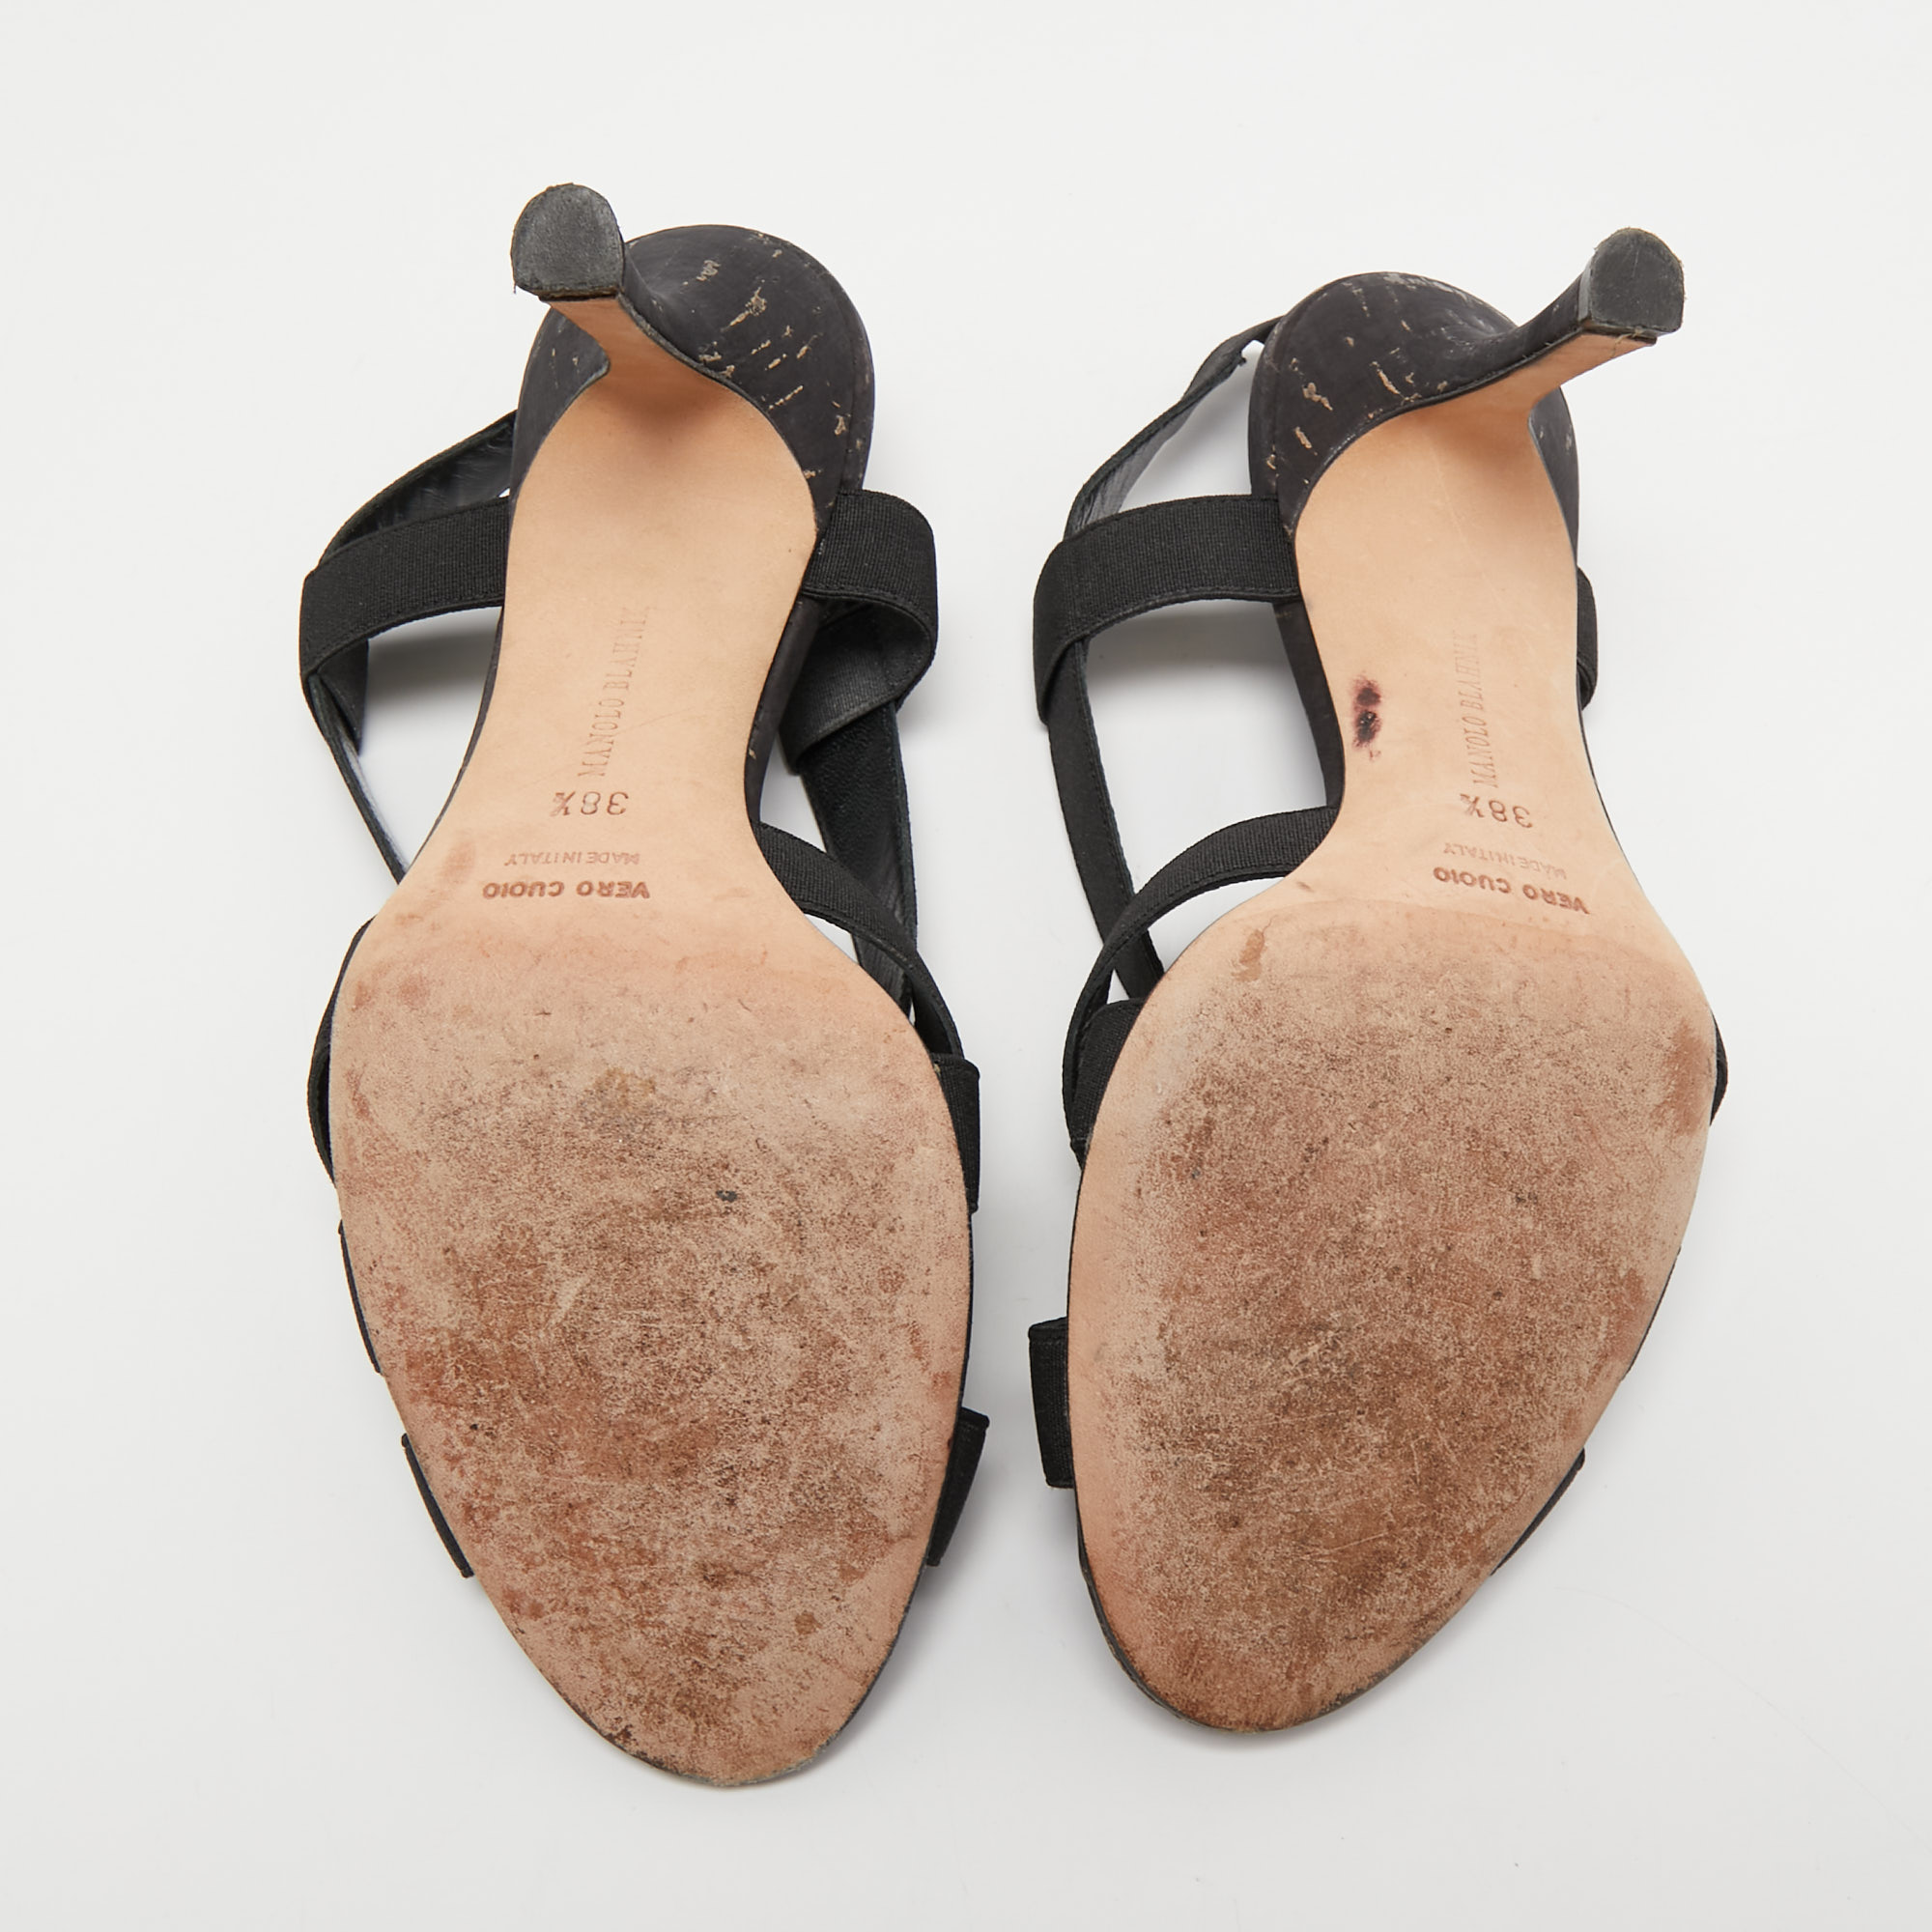 Manolo Blahnik Black Fabric Lasti Cork Strappy Sandals Size 38.5